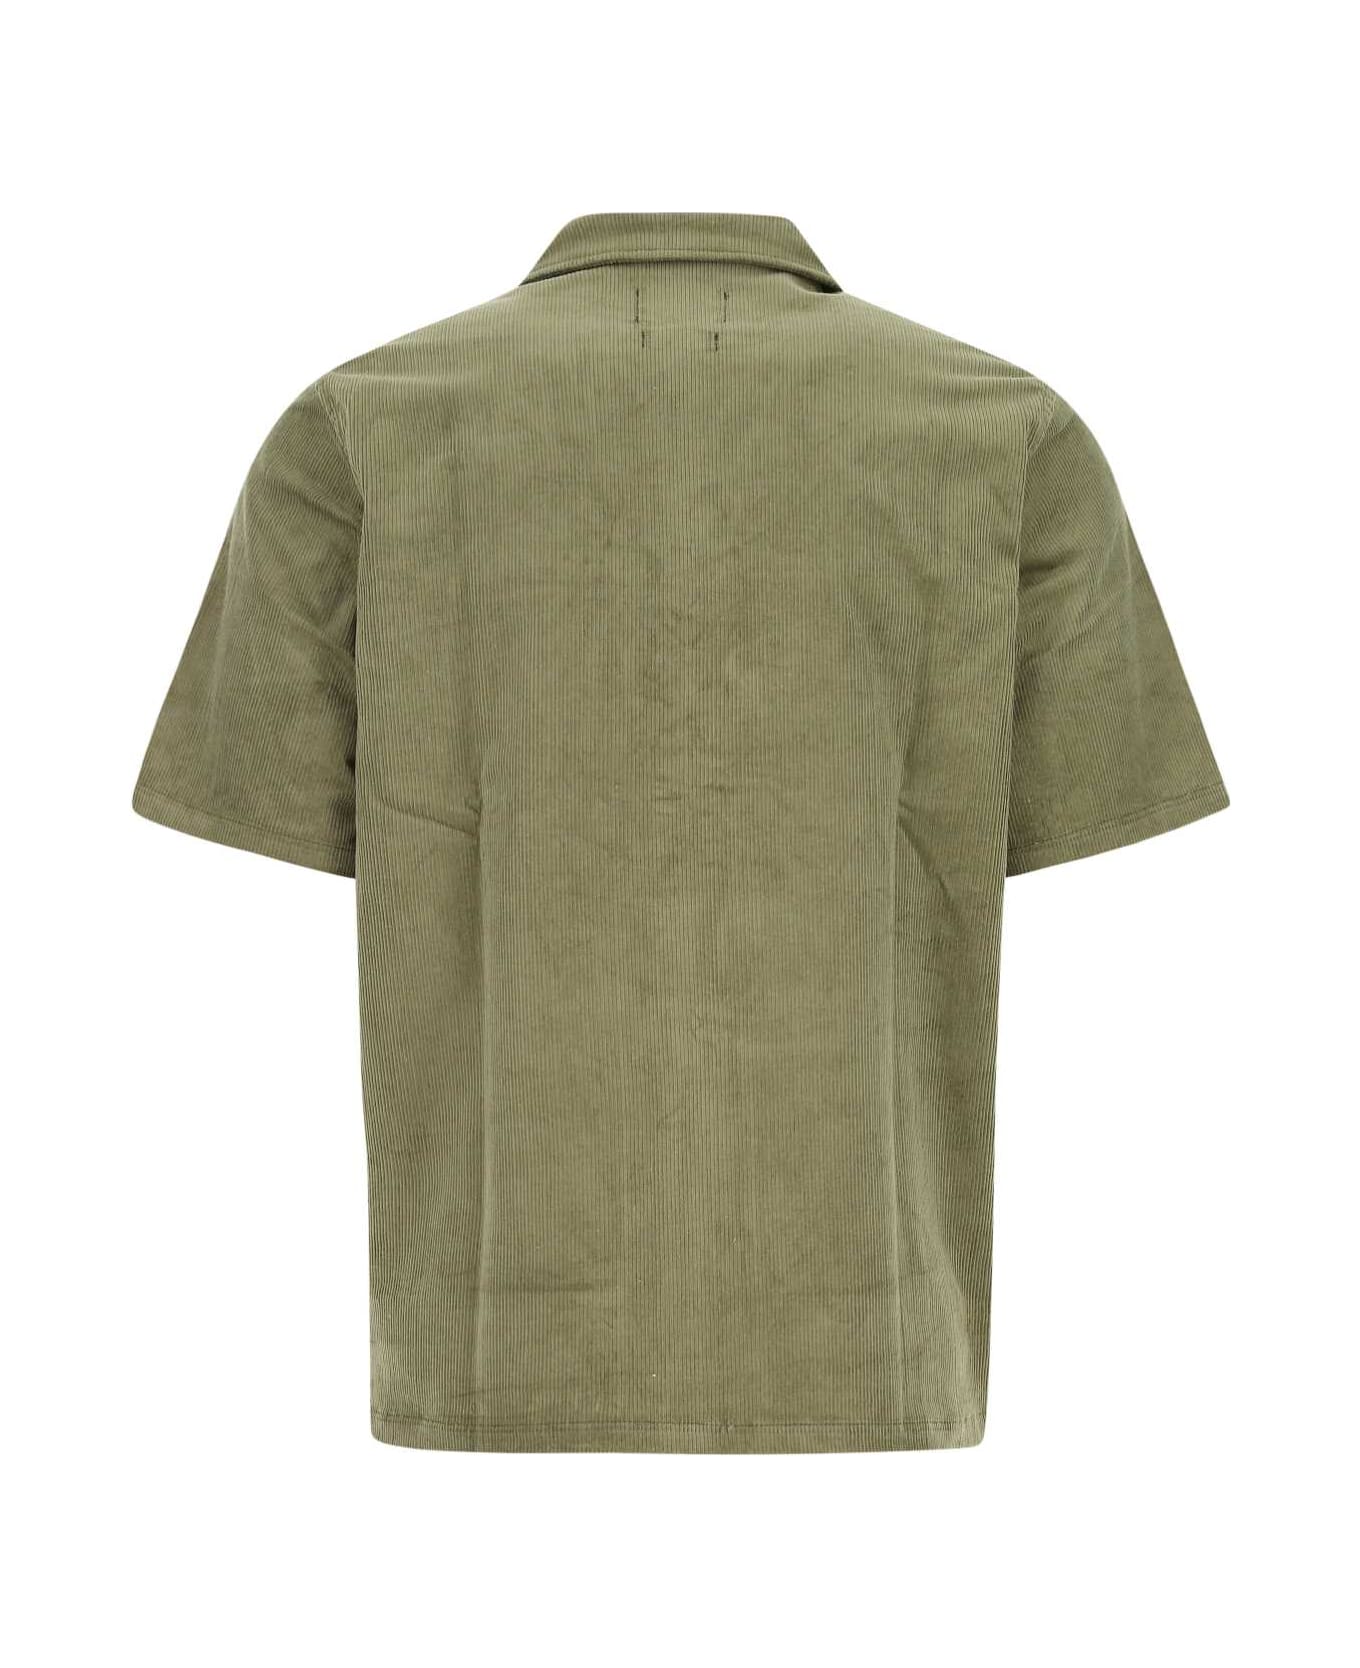 Howlin Olive Green Corduroy Shirt - GREEN